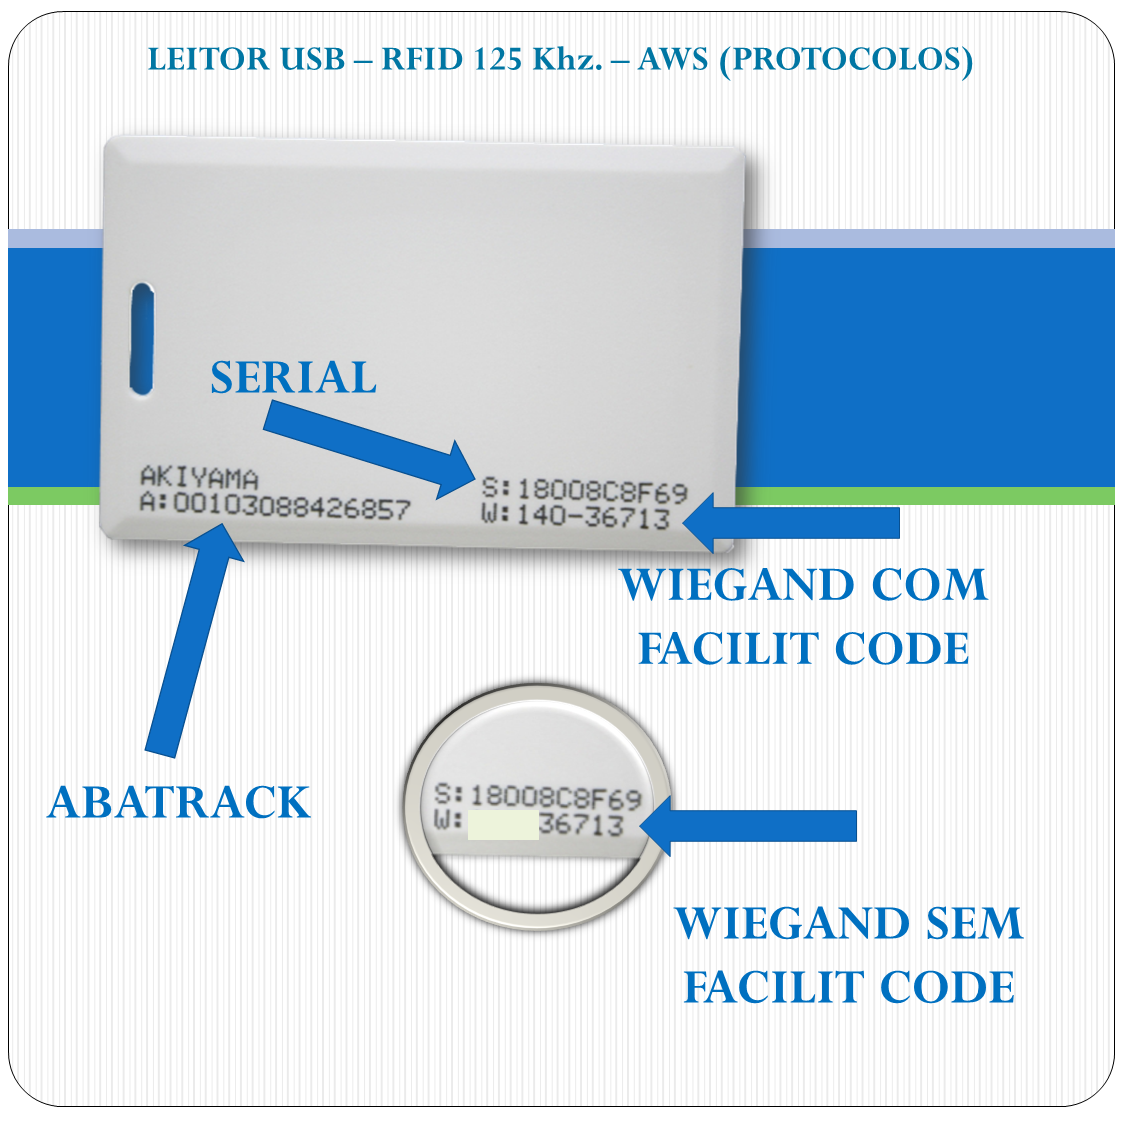 Leitor RFID USB - AWS-V2 - 125Khz - Multiprotocolo